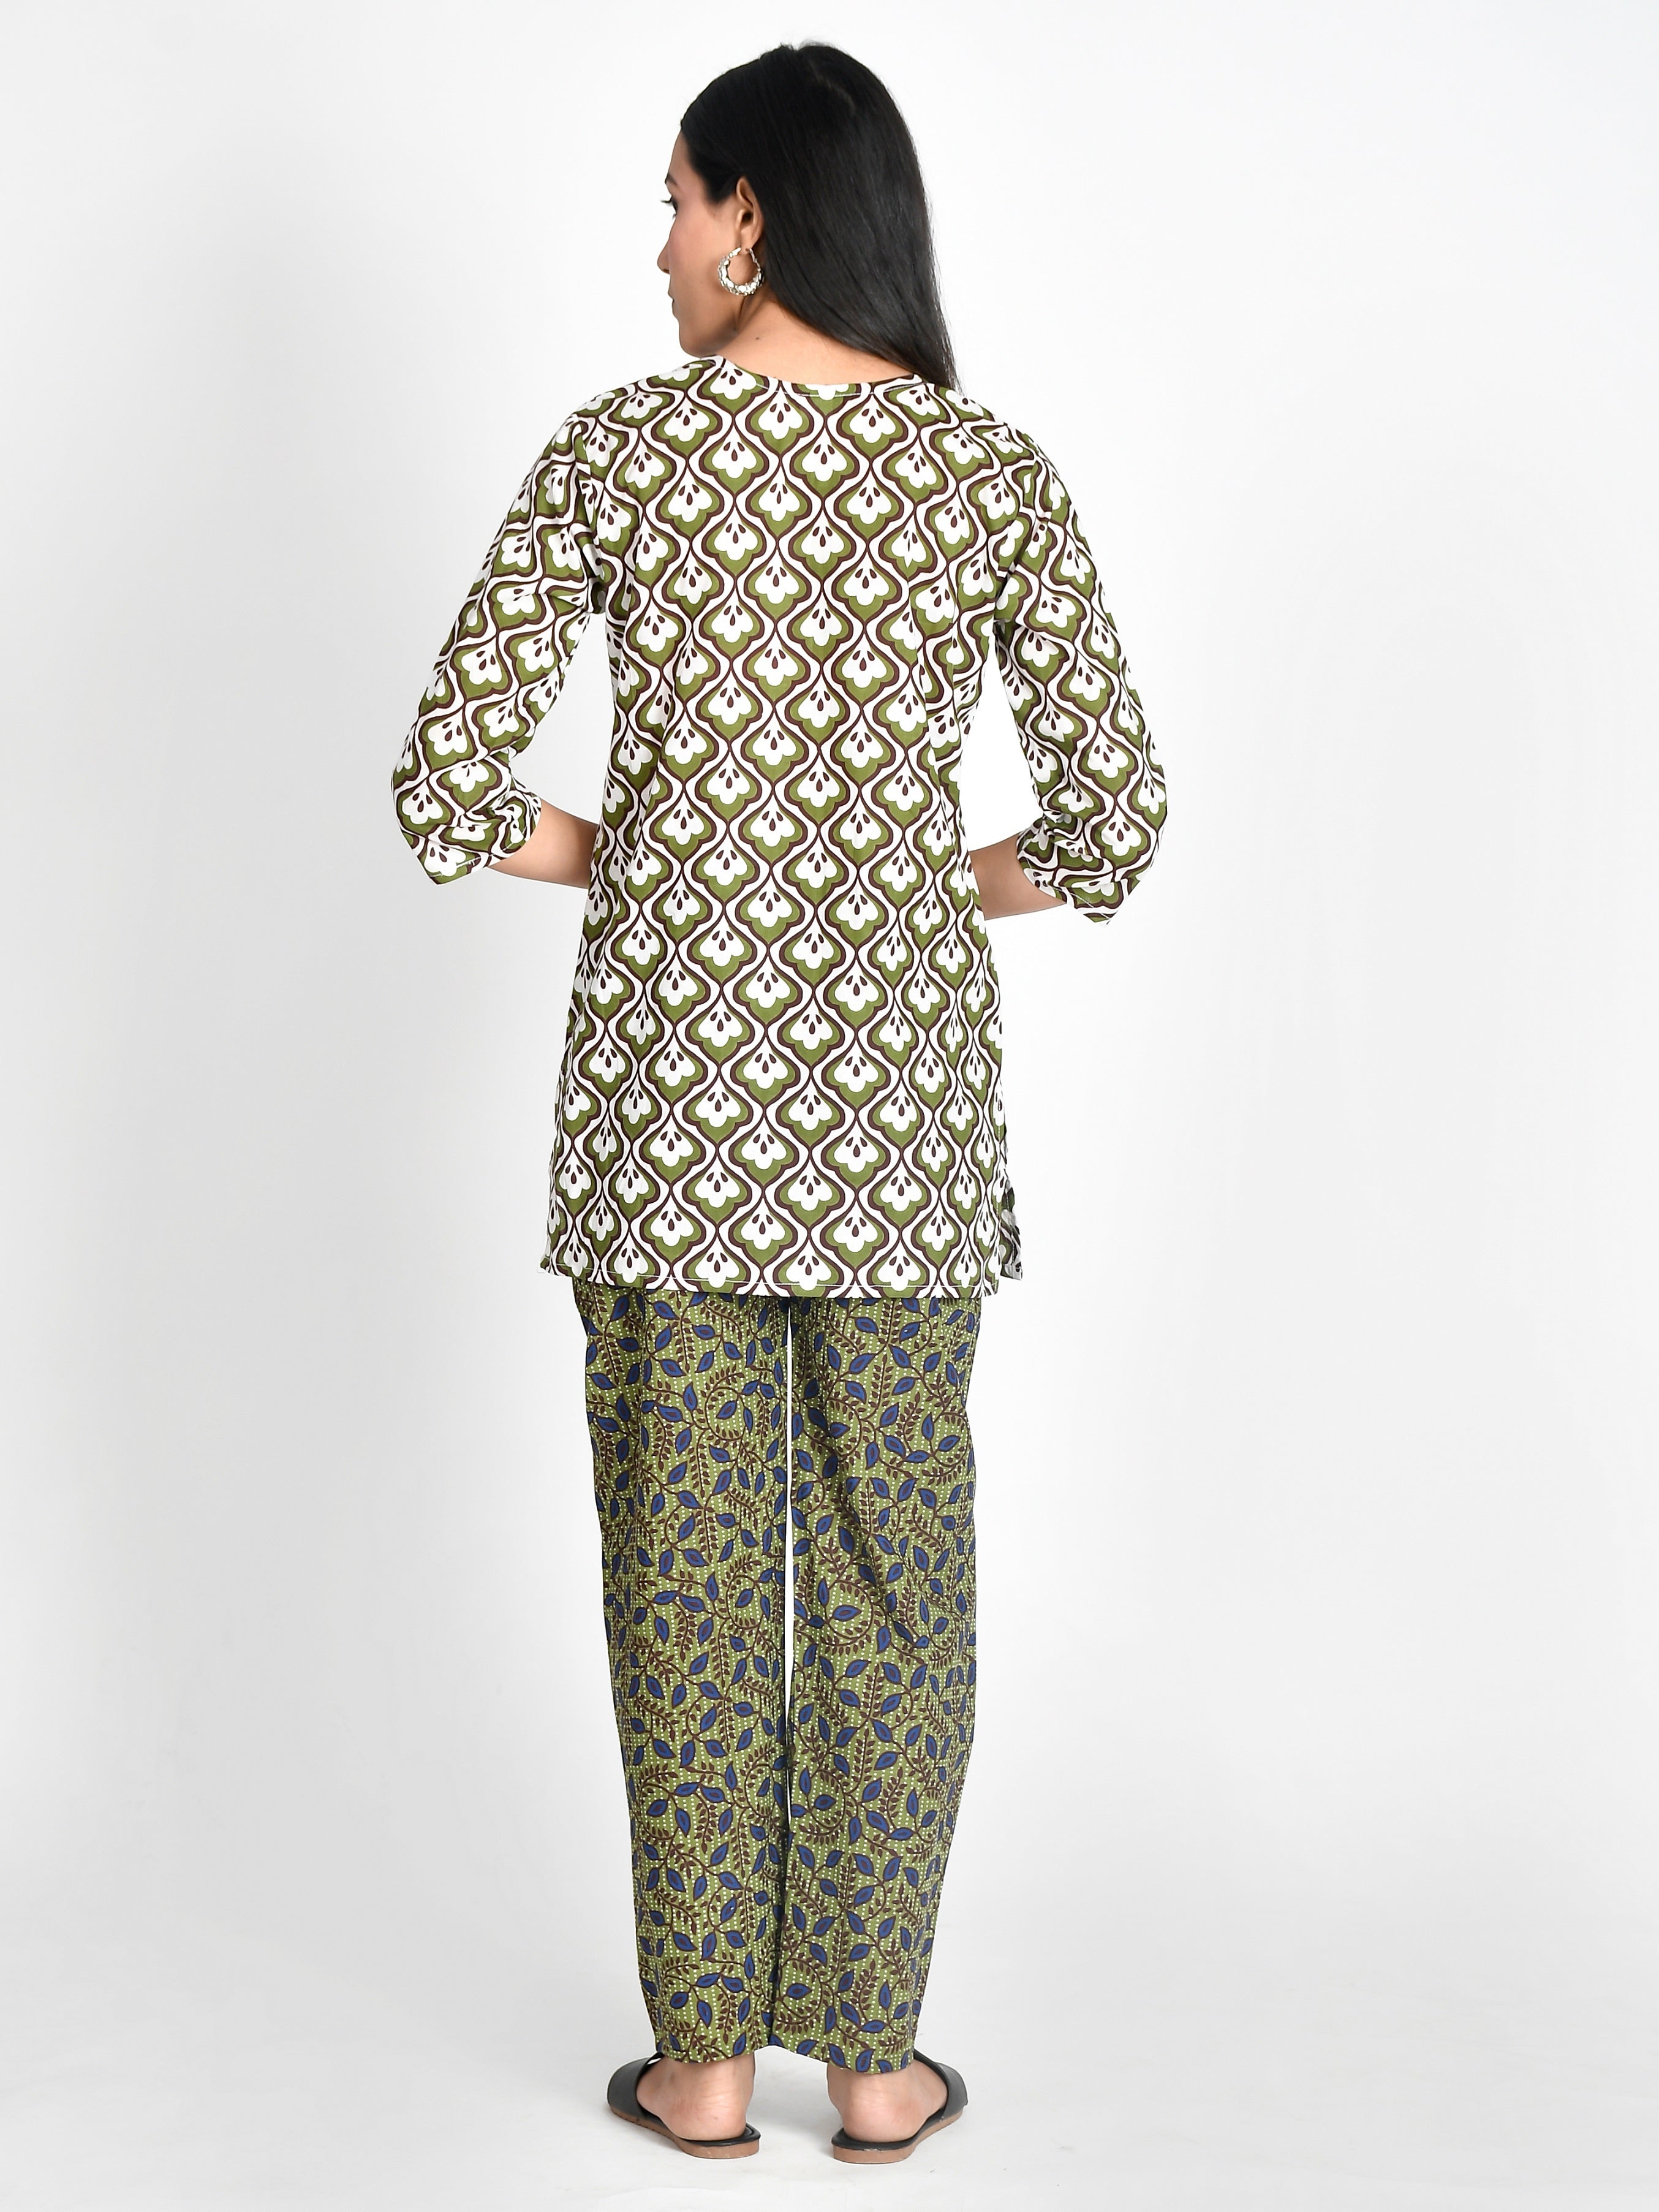 Sexy Pyjama Jumpsuit with Butt Flap Ladies Sleepsuit Onezee - White | eBay